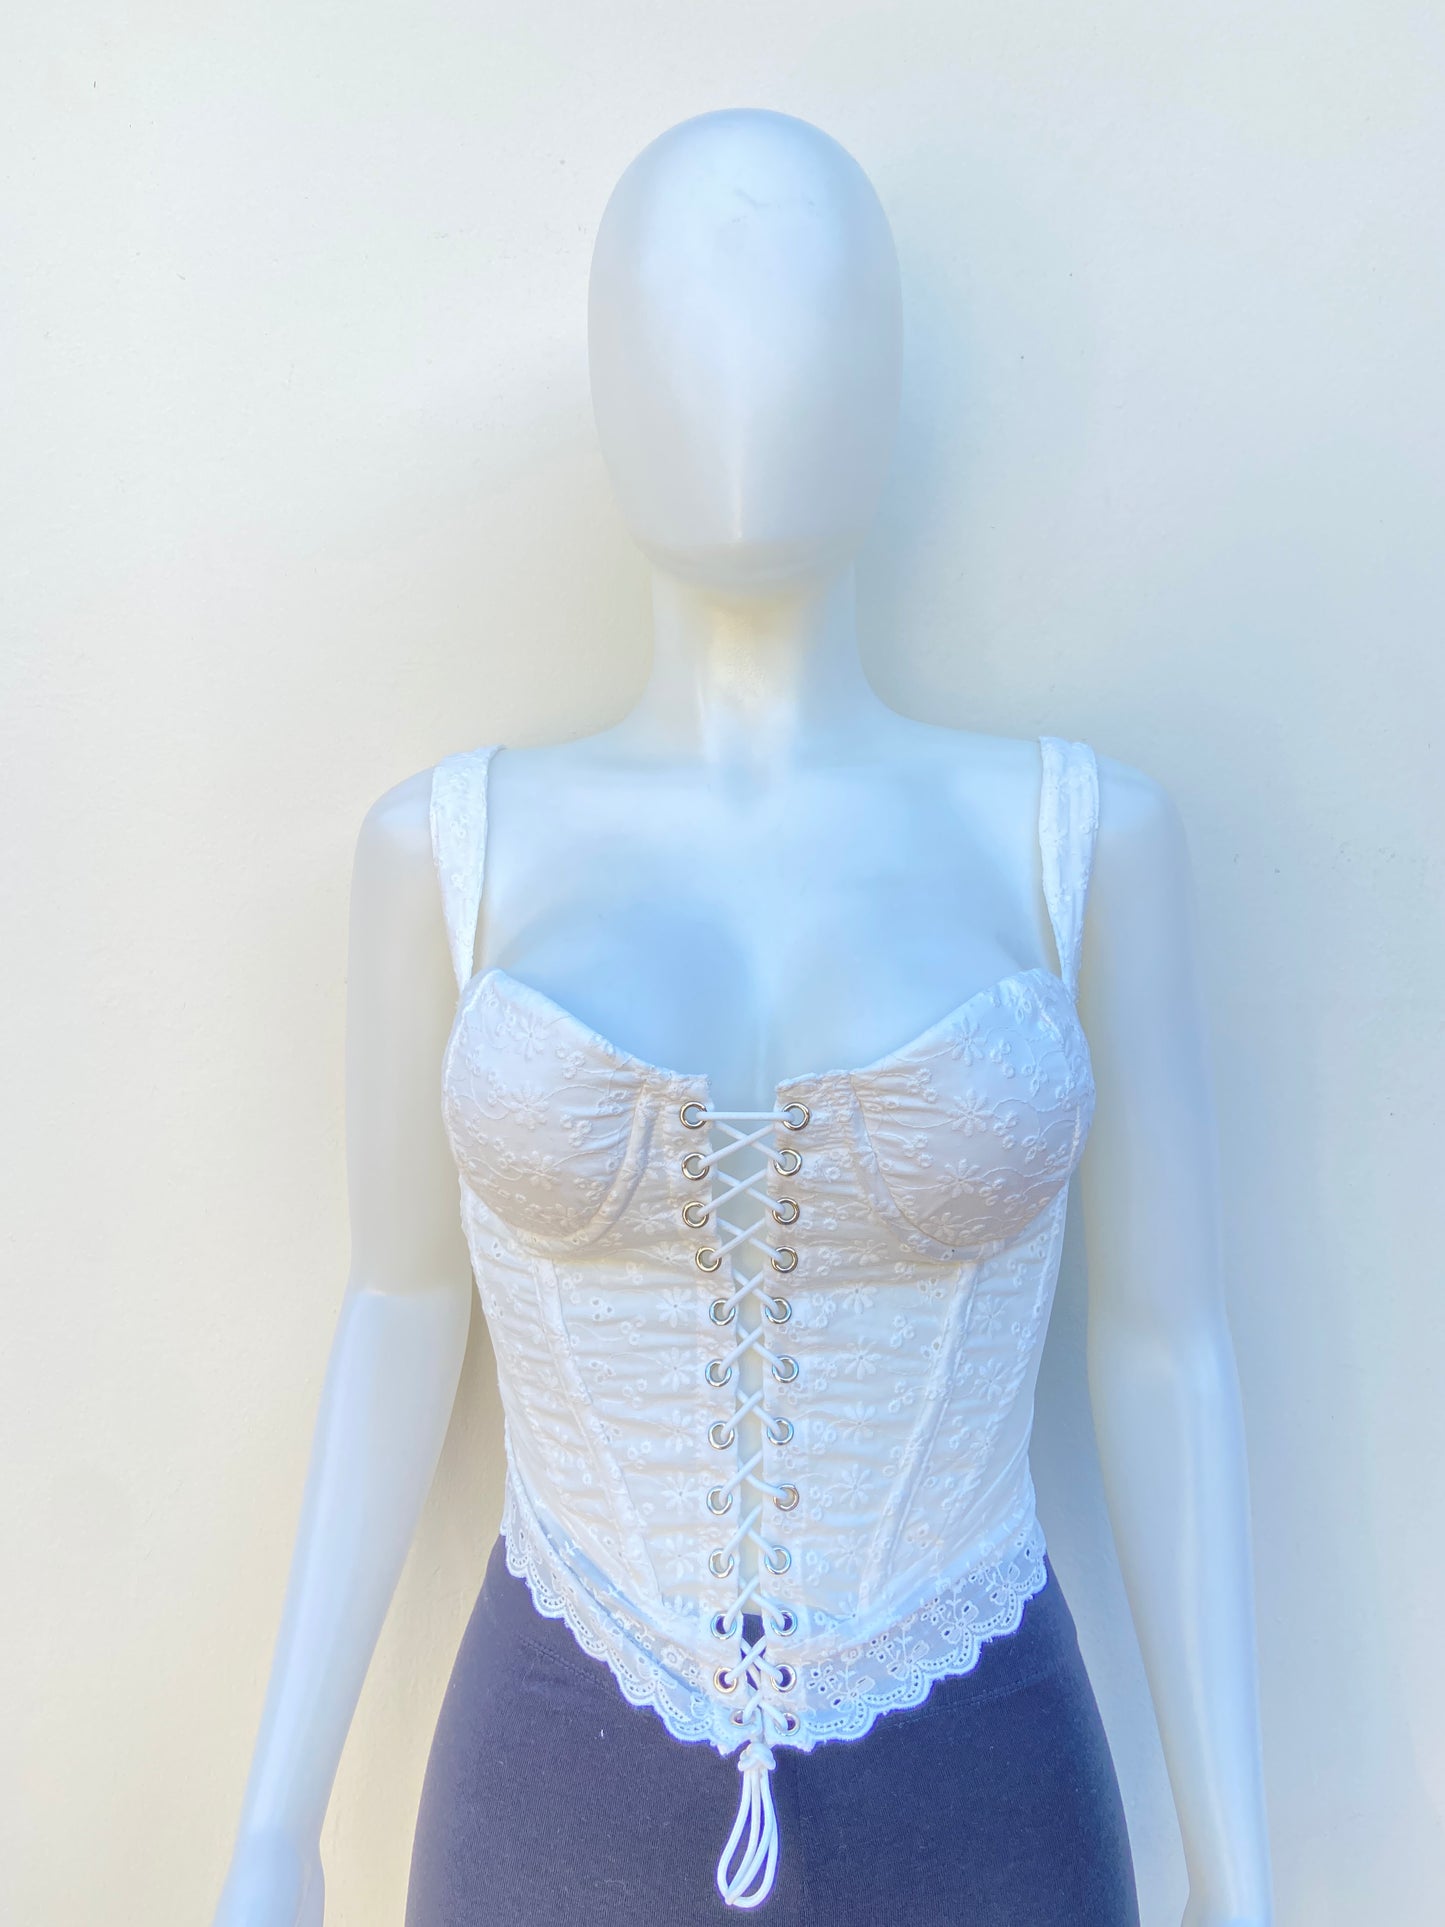 Top Fashion Nova original blanco en encaje, en estilo corset, con lazos ajustables.